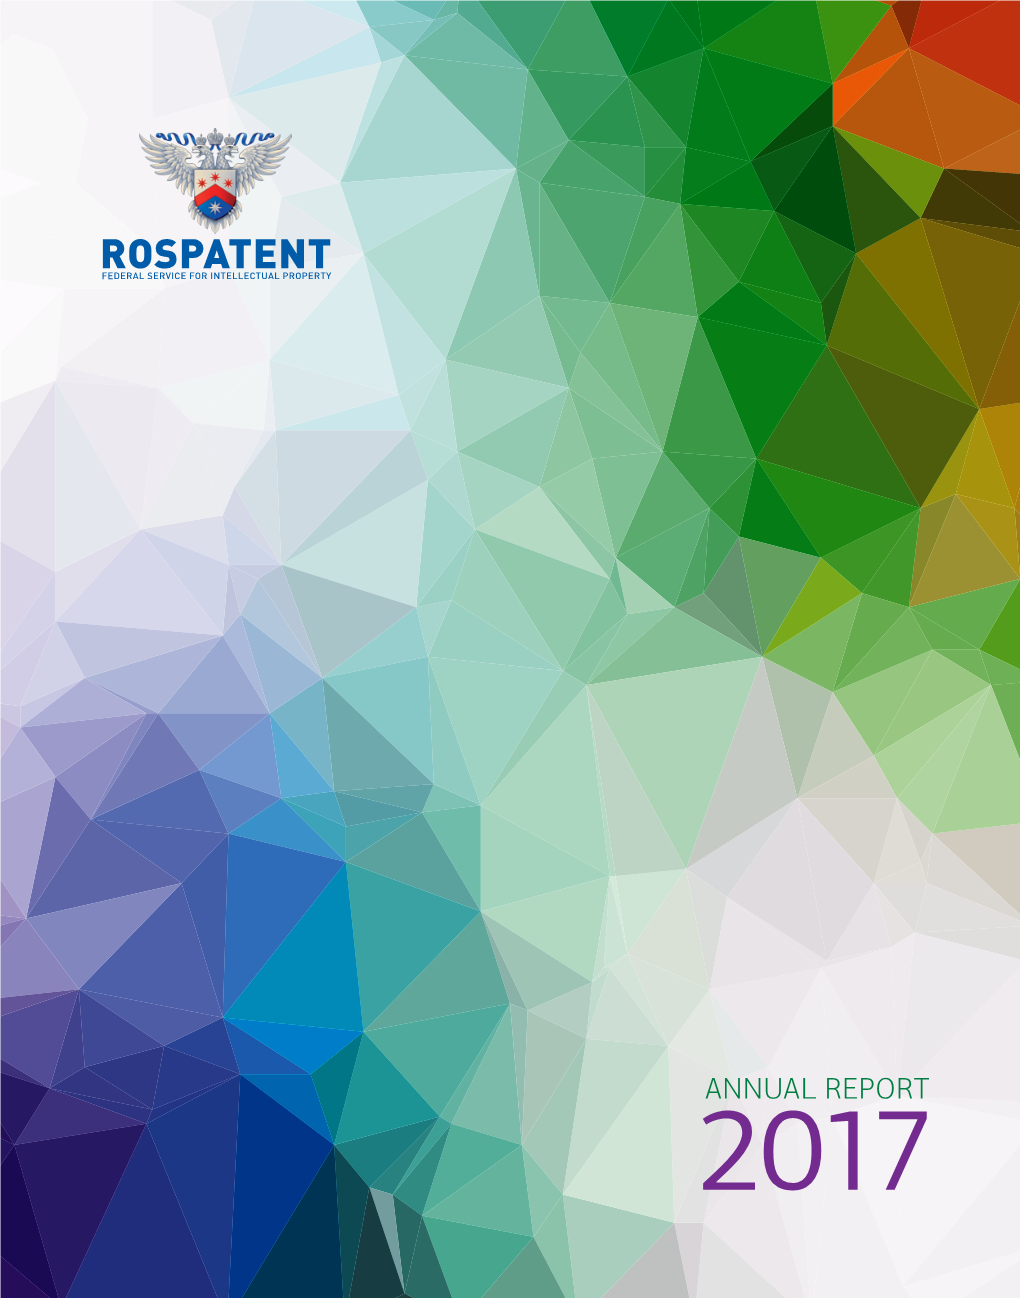 2017 Annual Report of Rospatent